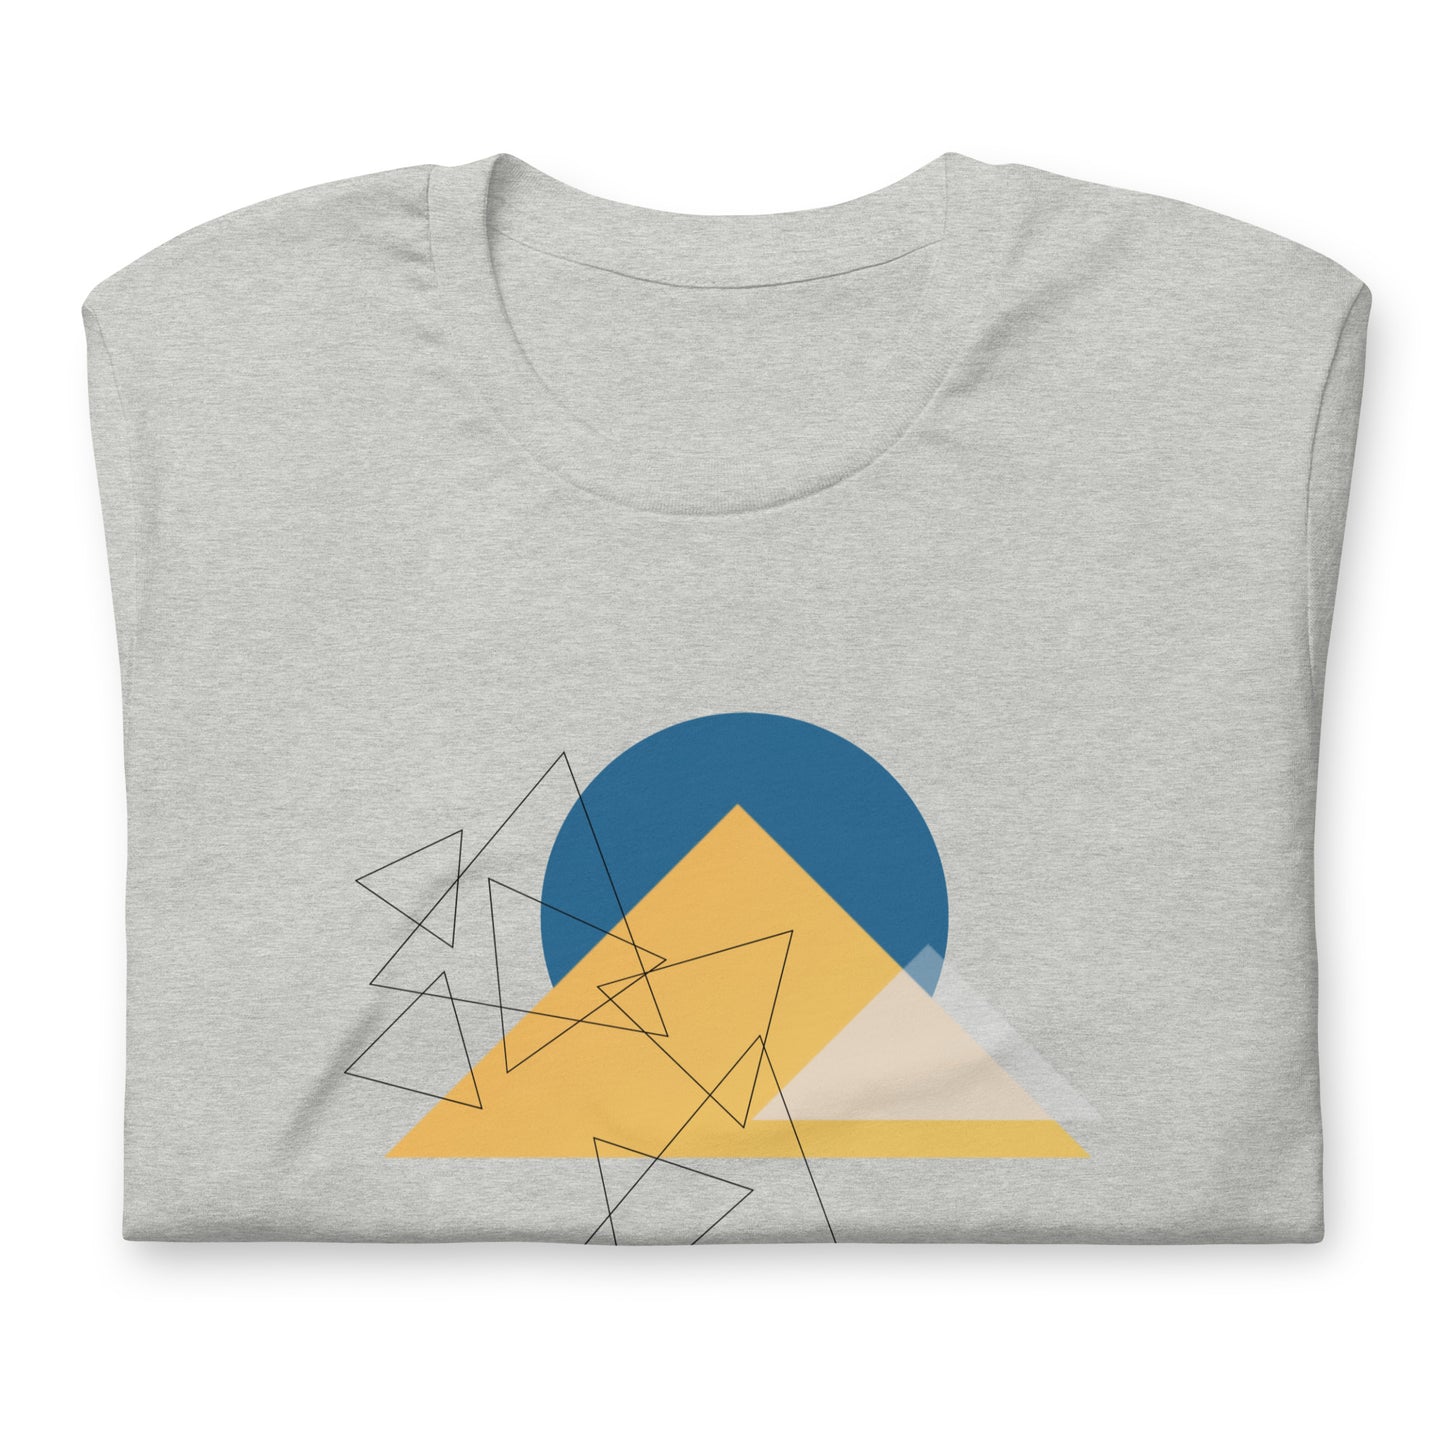 graphic tshirt t-shirt tee triangle circle sun sky shapes geometric modern bella canvas wear clothing top 